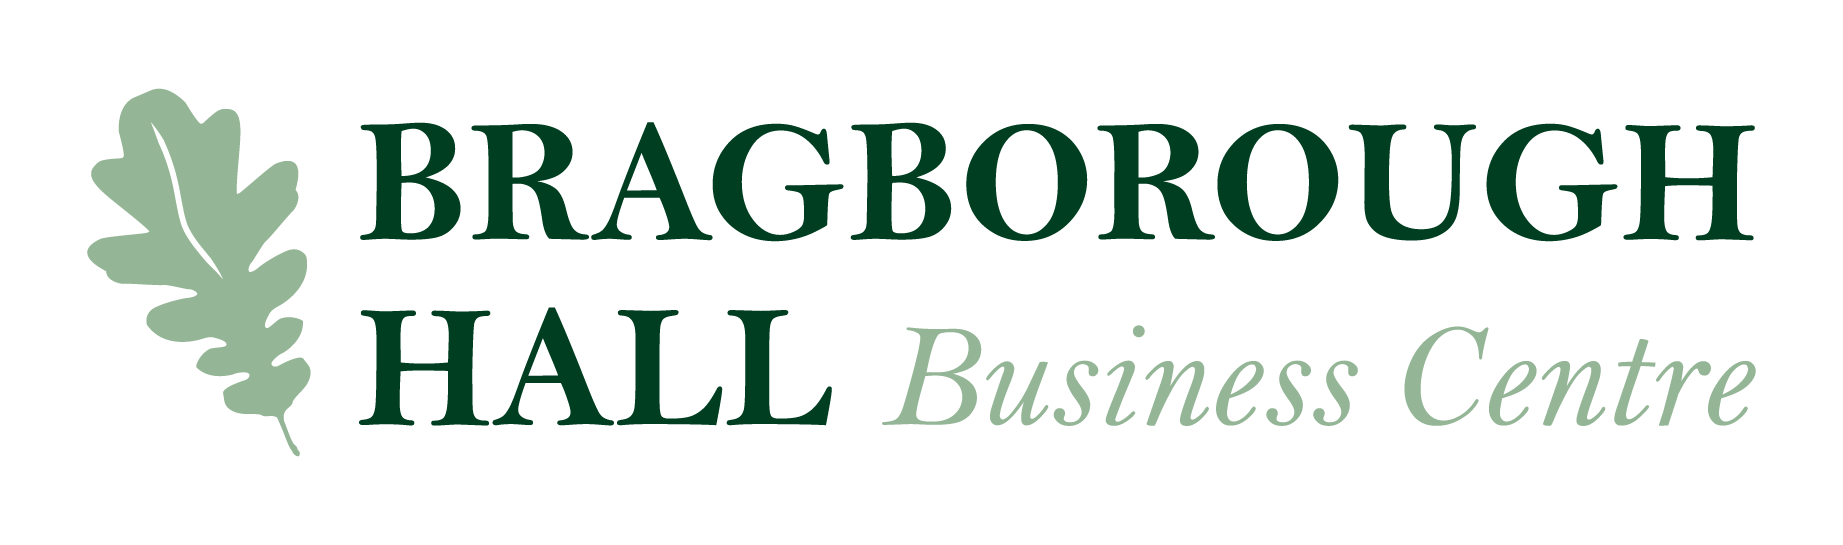 Bragborough Hall Business Centre Temp